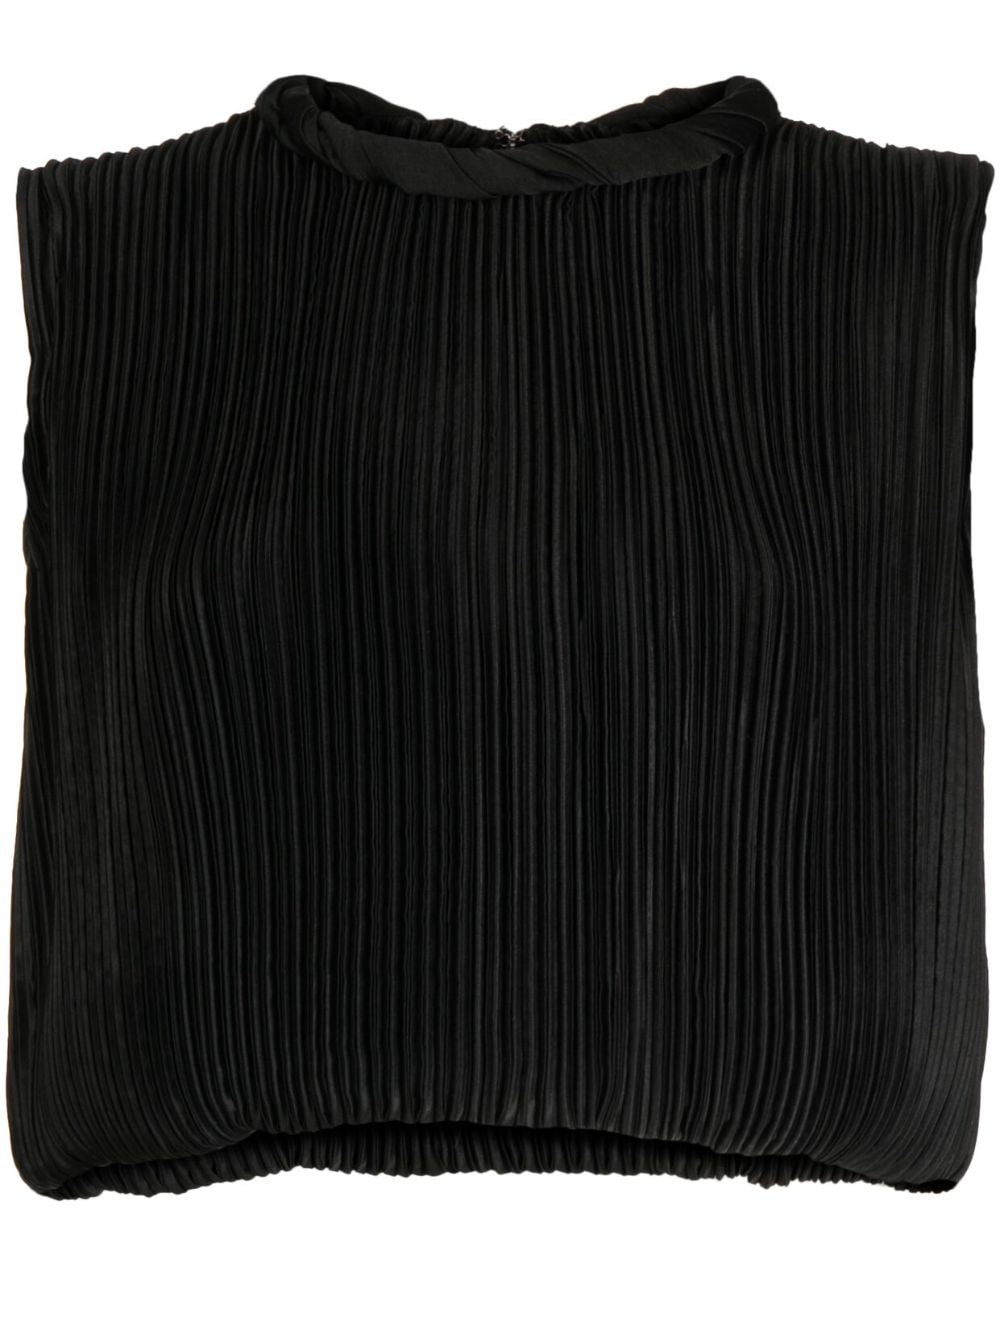 Rachel Gilbert Ziara sleeveless cropped top - Black von Rachel Gilbert